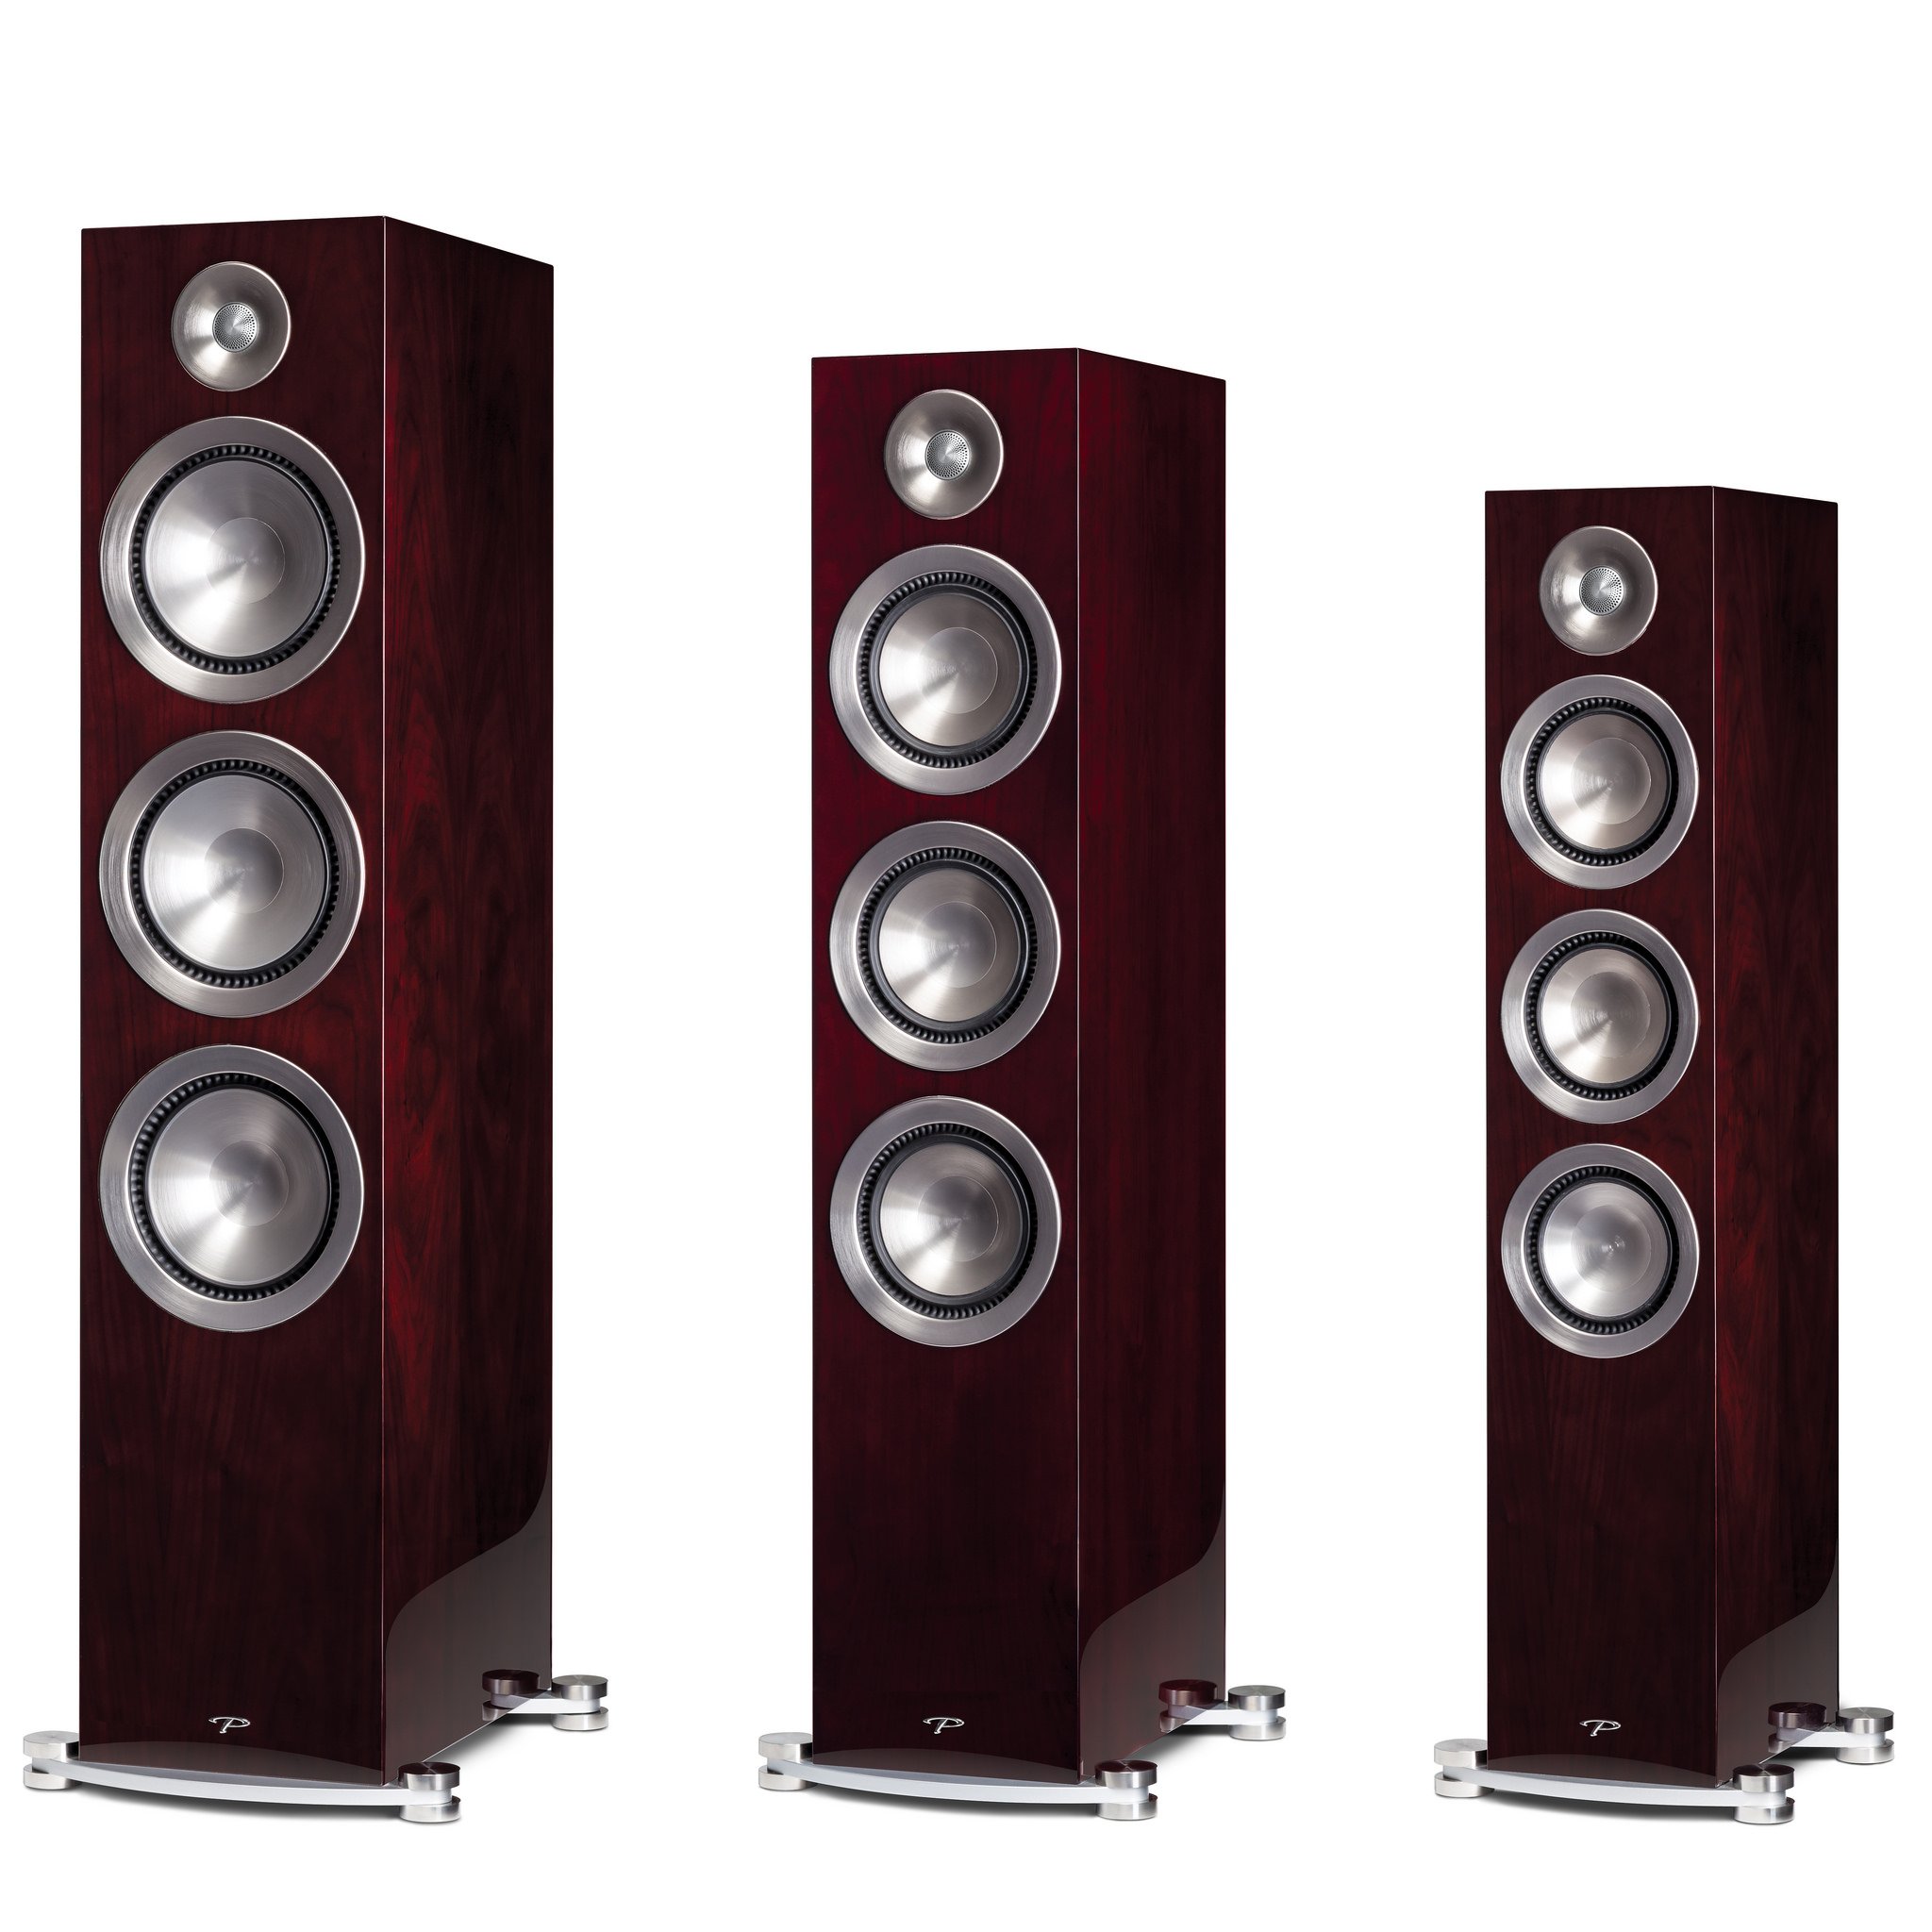 Paradigm Prestige 75f Floorstanding Speaker System Review